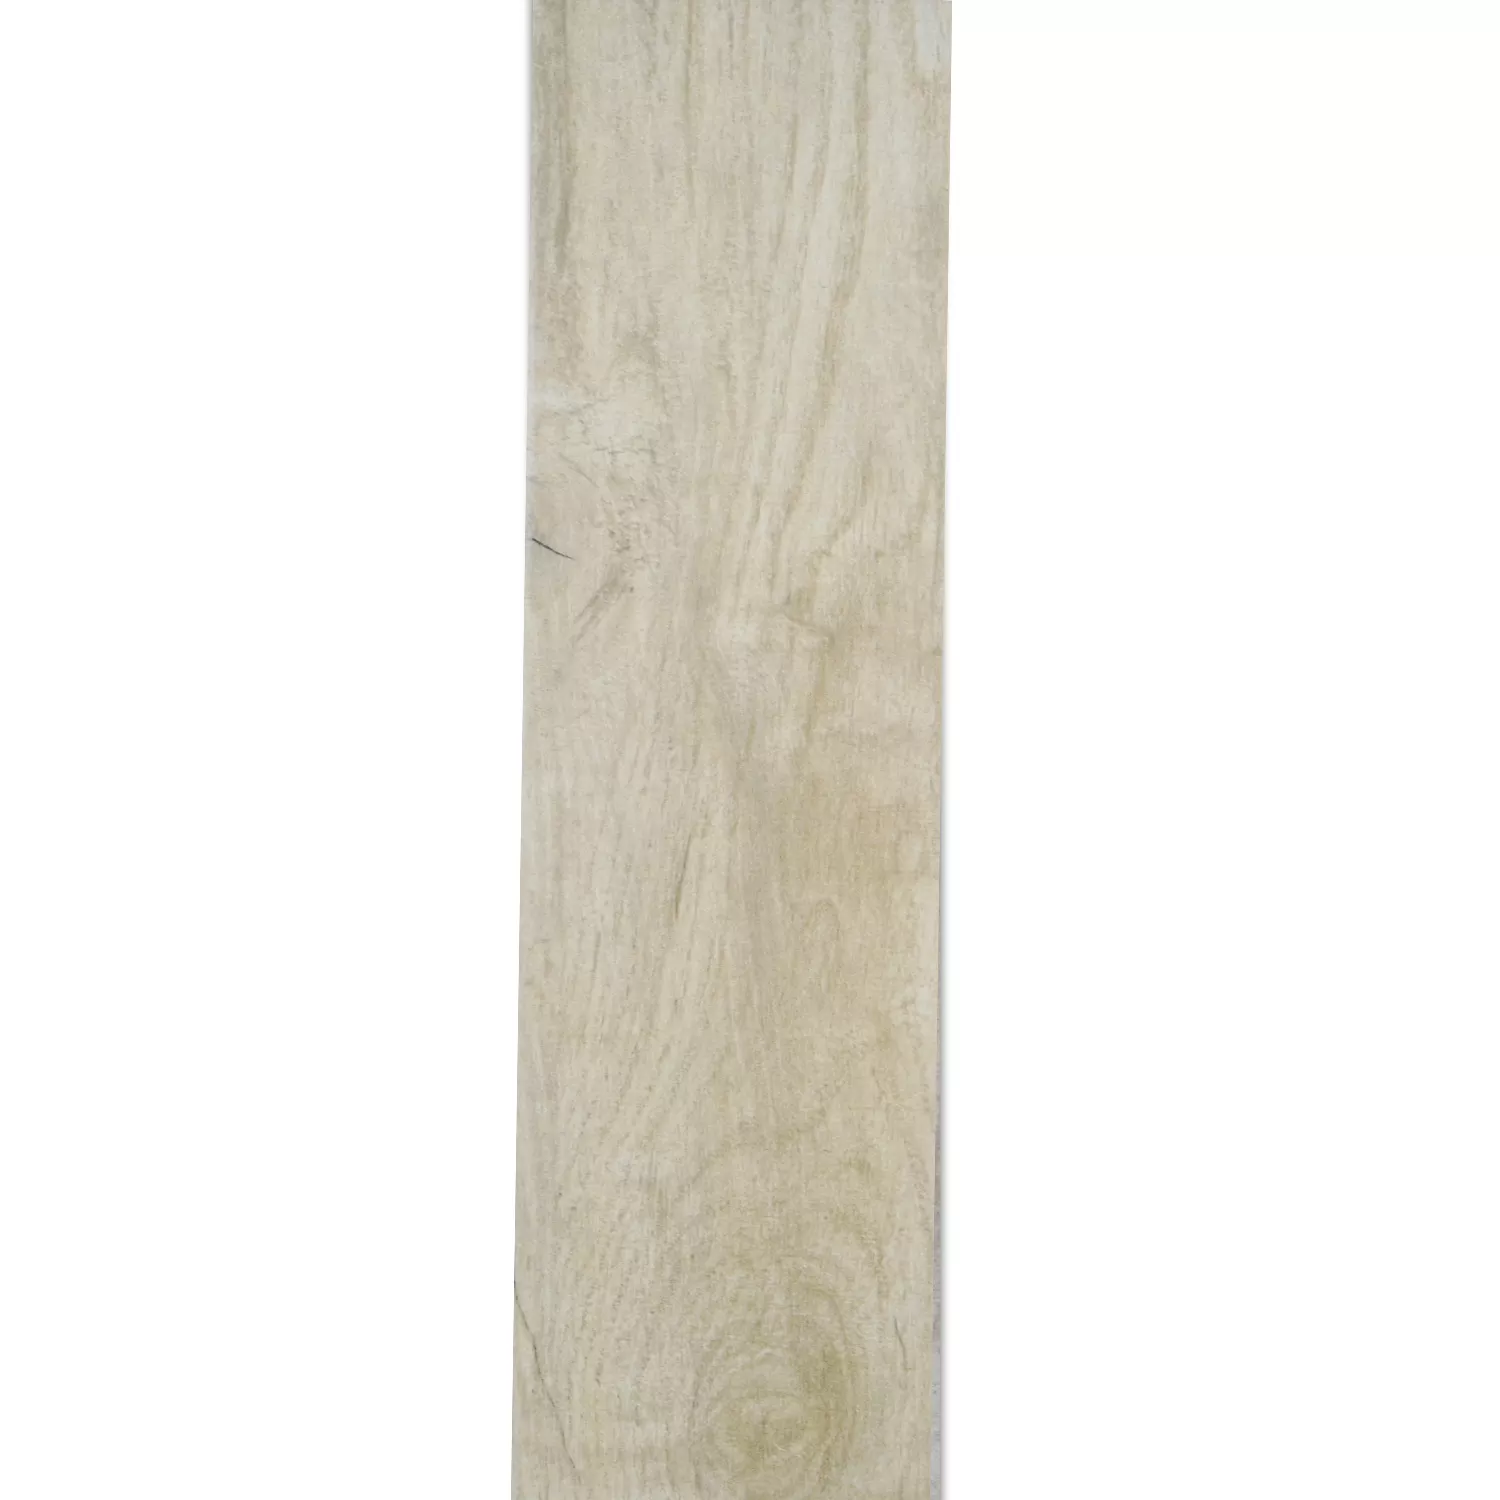 Próbka Wygląd Drewna Płytki Podłogowe Palaimon Piasek 15x90cm